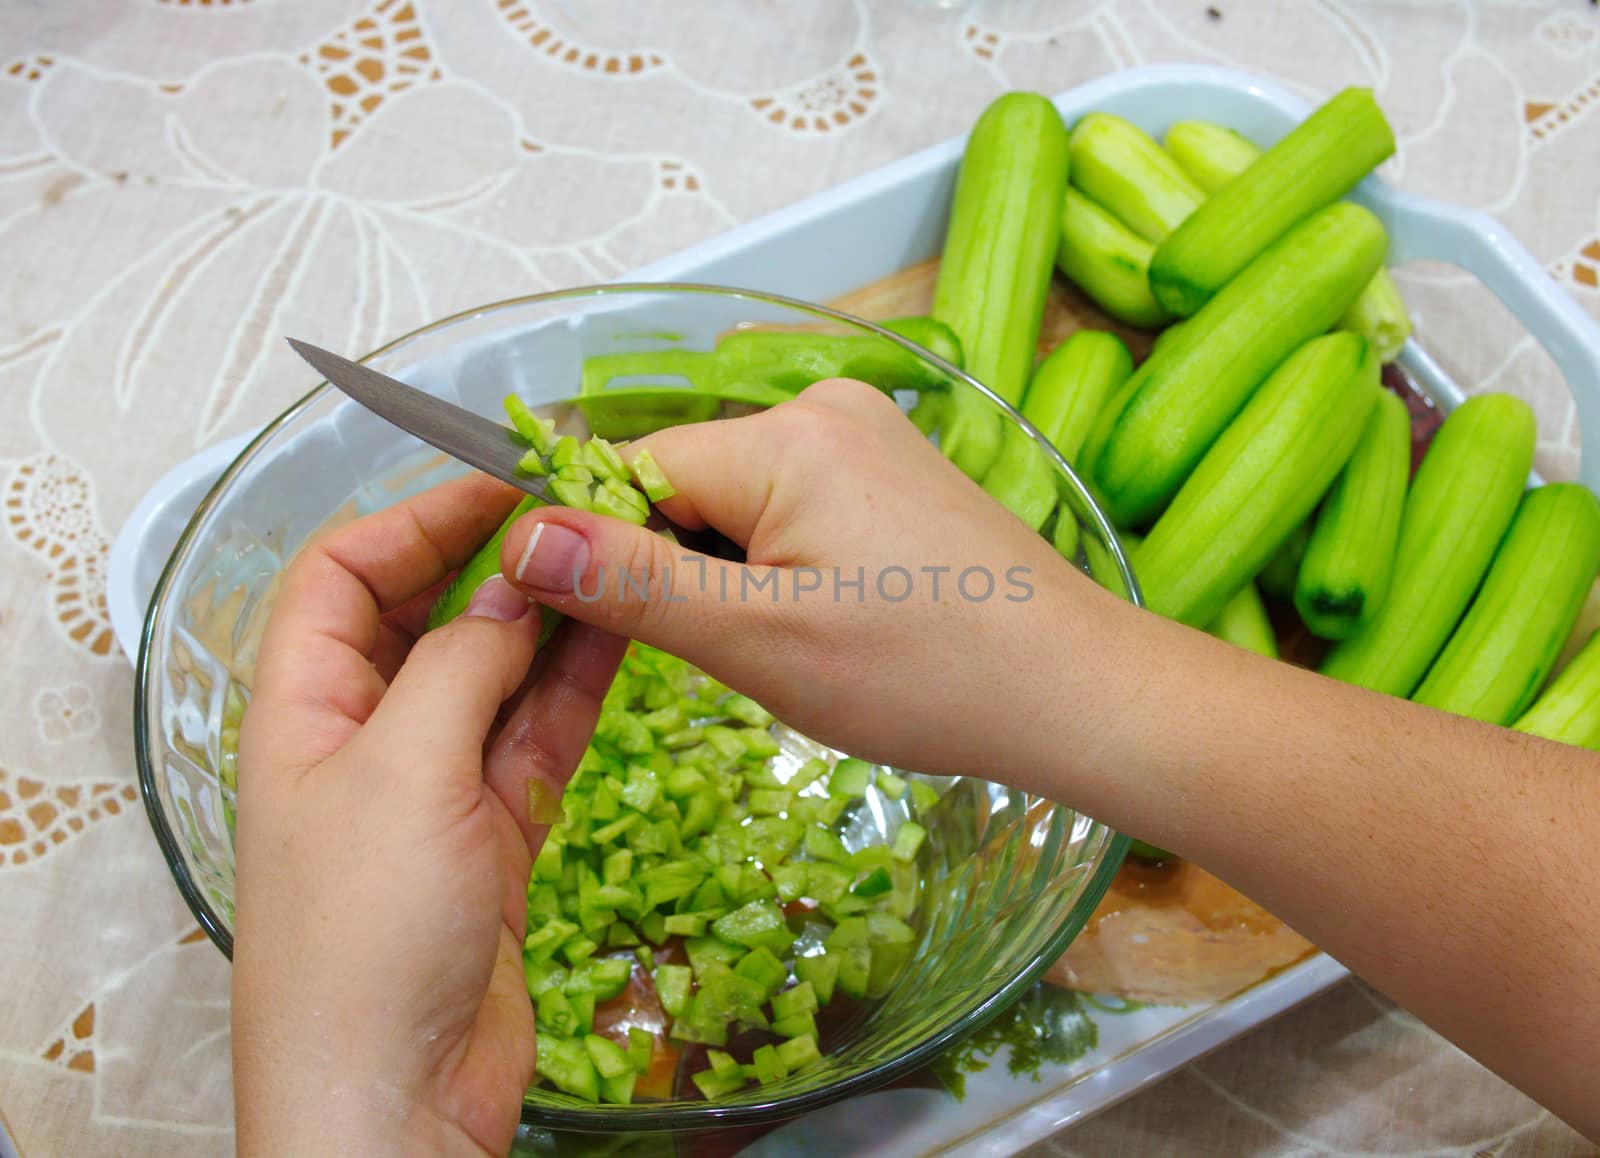 prepare a salad by yebeka